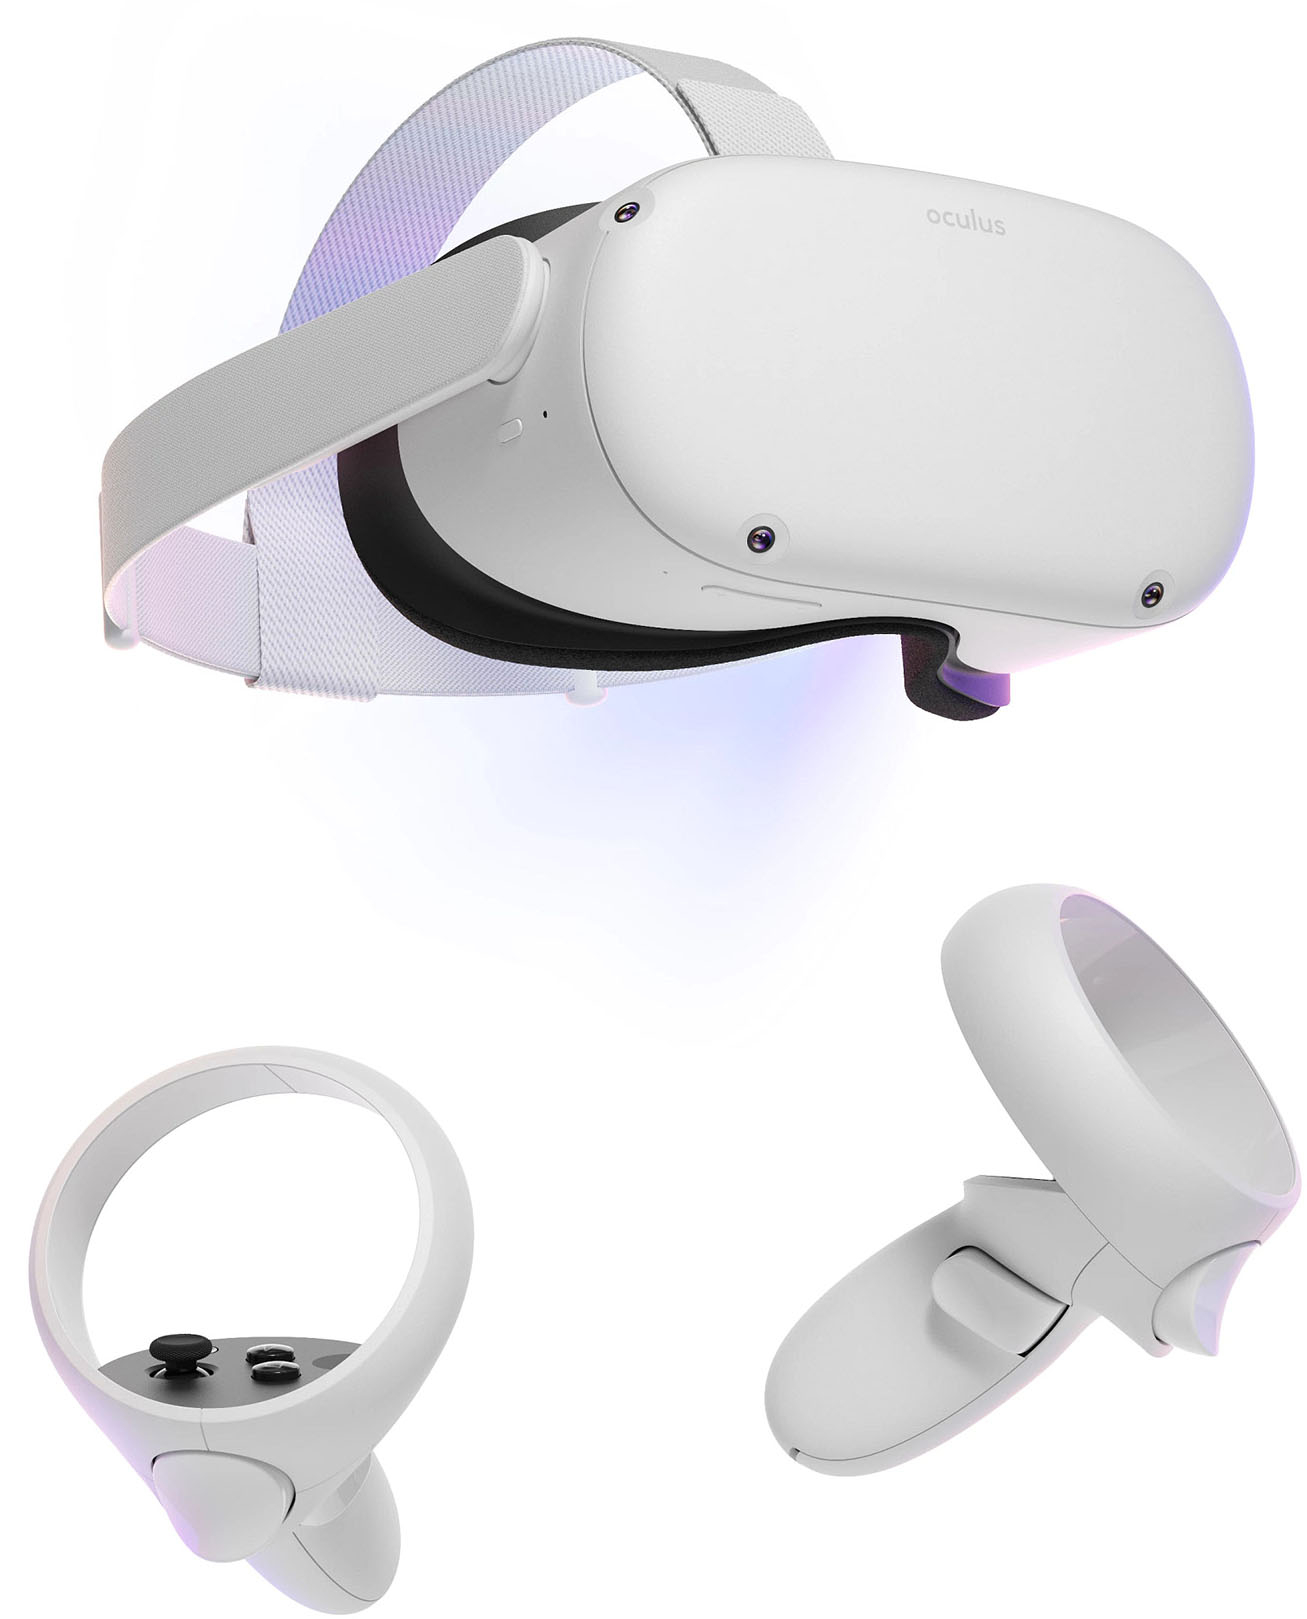 Tyggegummi Lyrical ale Oculus Quest 2 Advanced All-In-One Virtual Reality Headset 128GB Renewed  899-00182-02 - Best Buy